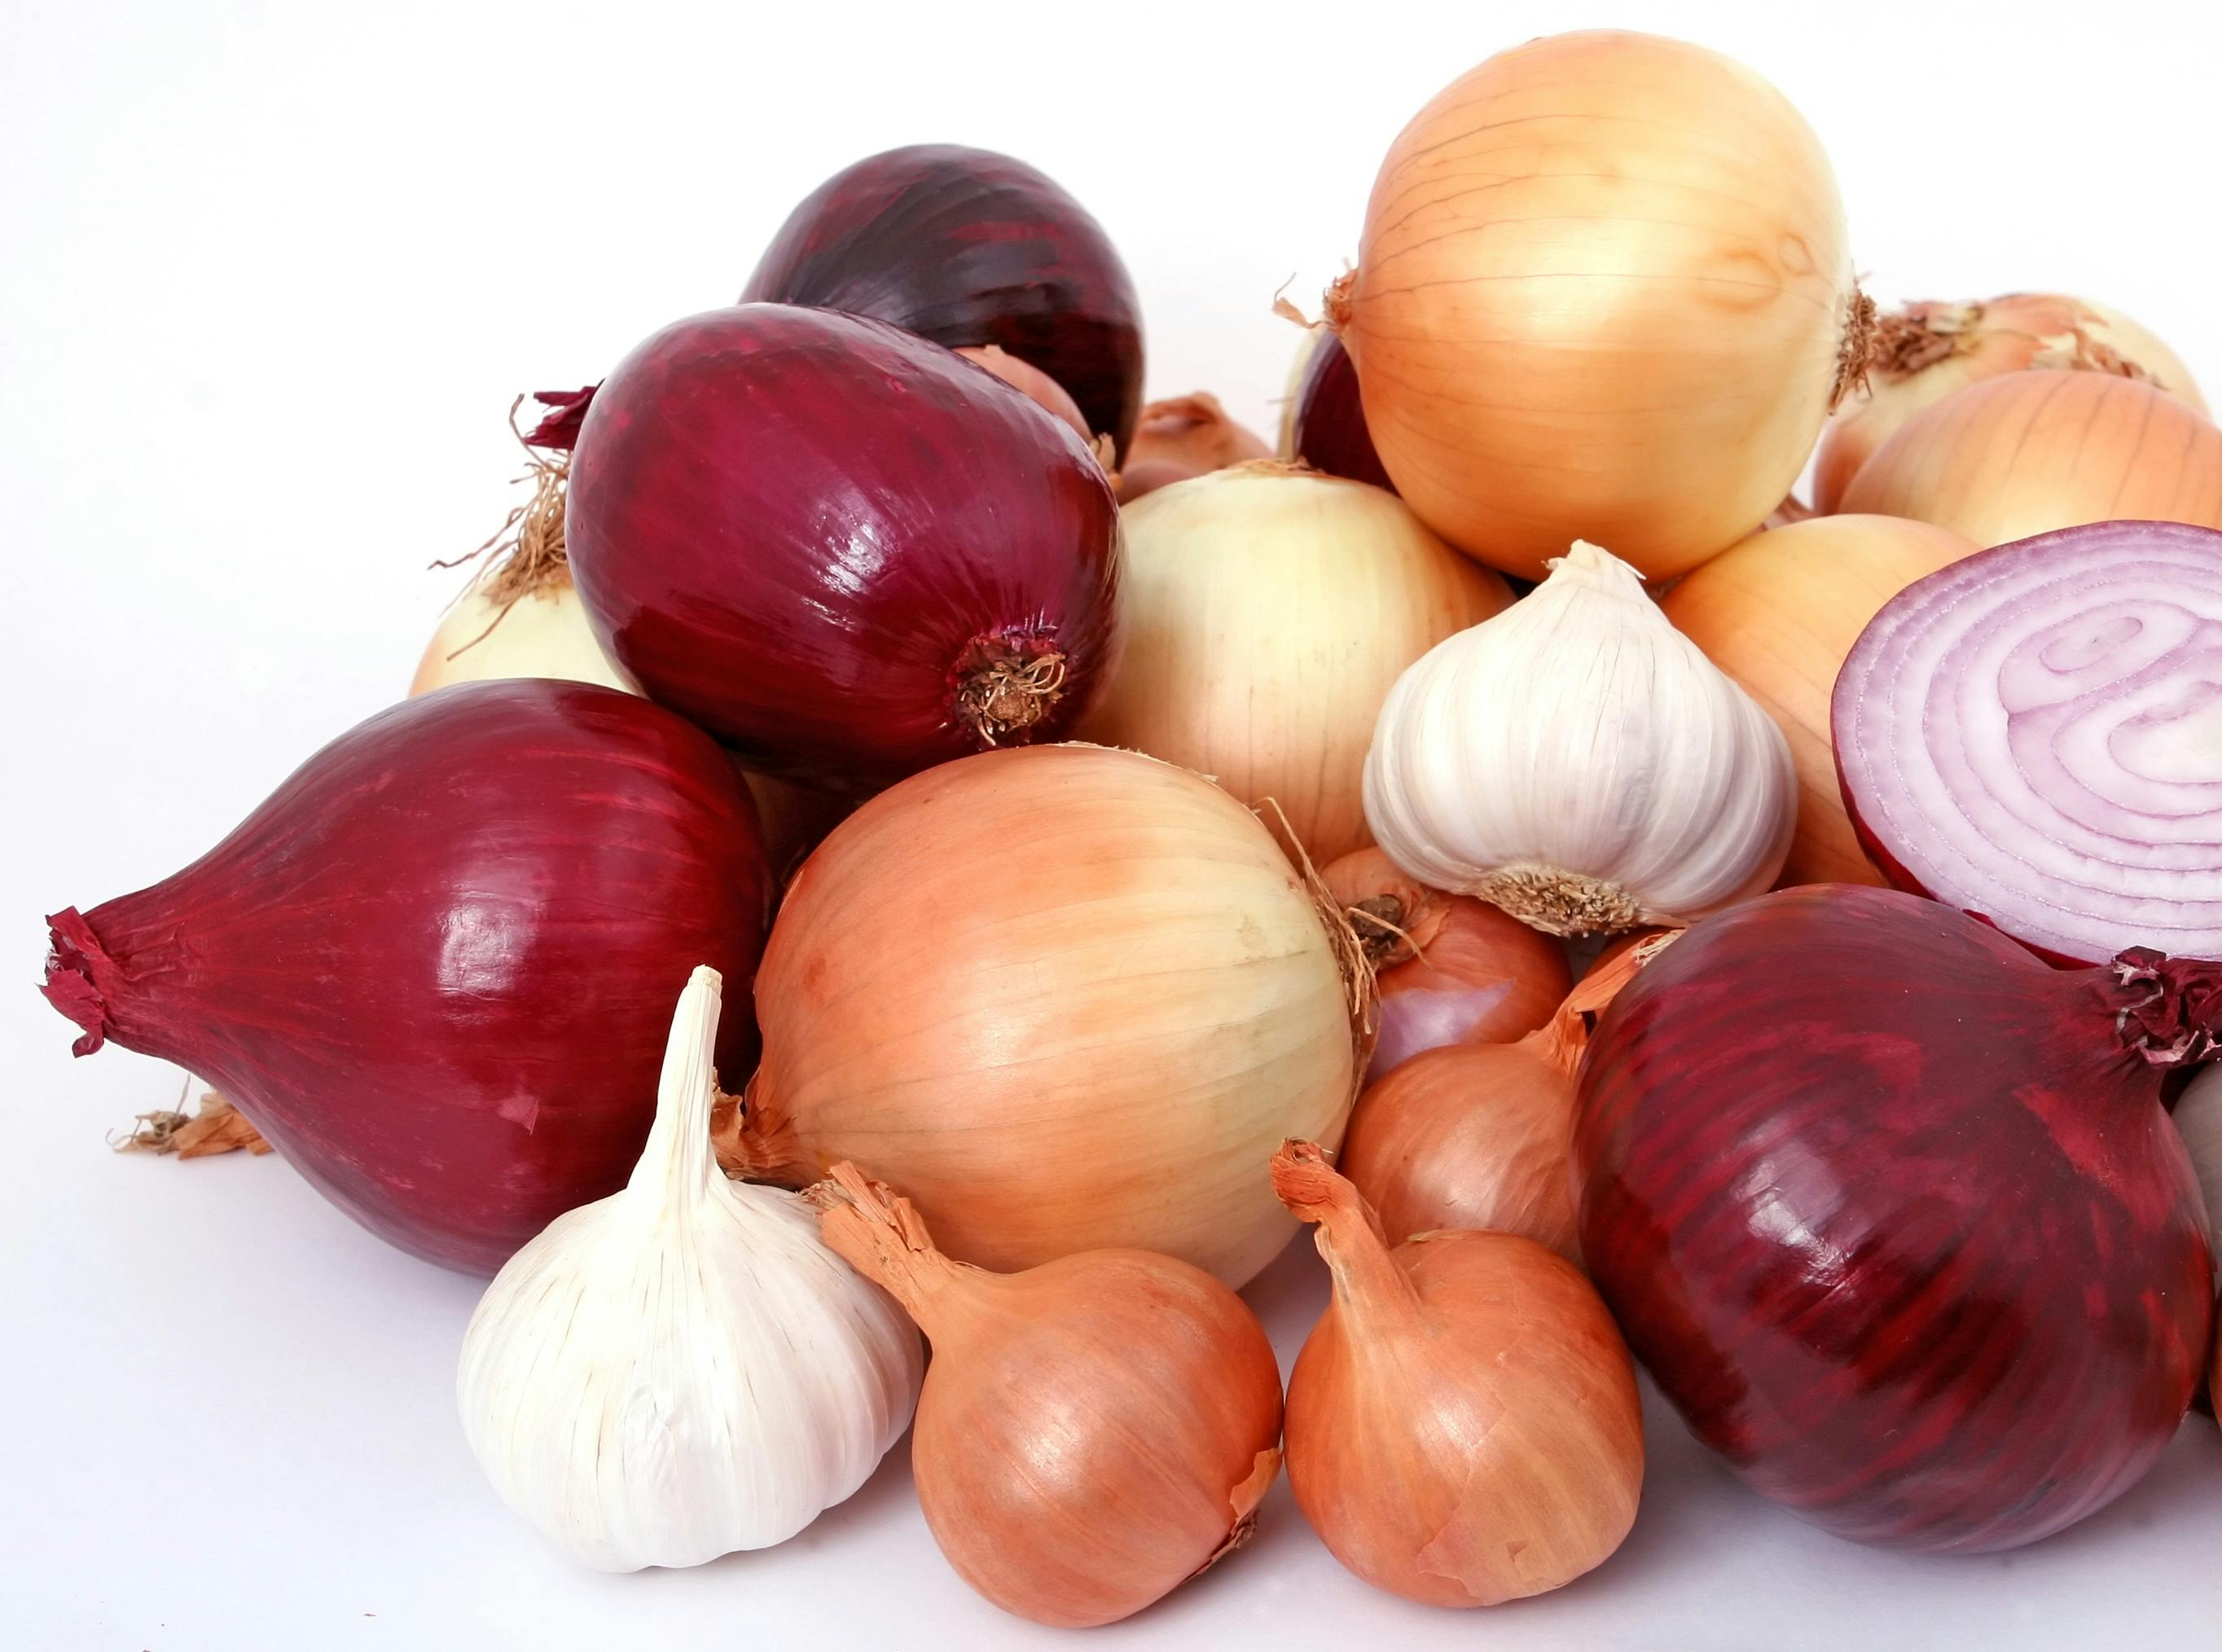 are shallots purple onions